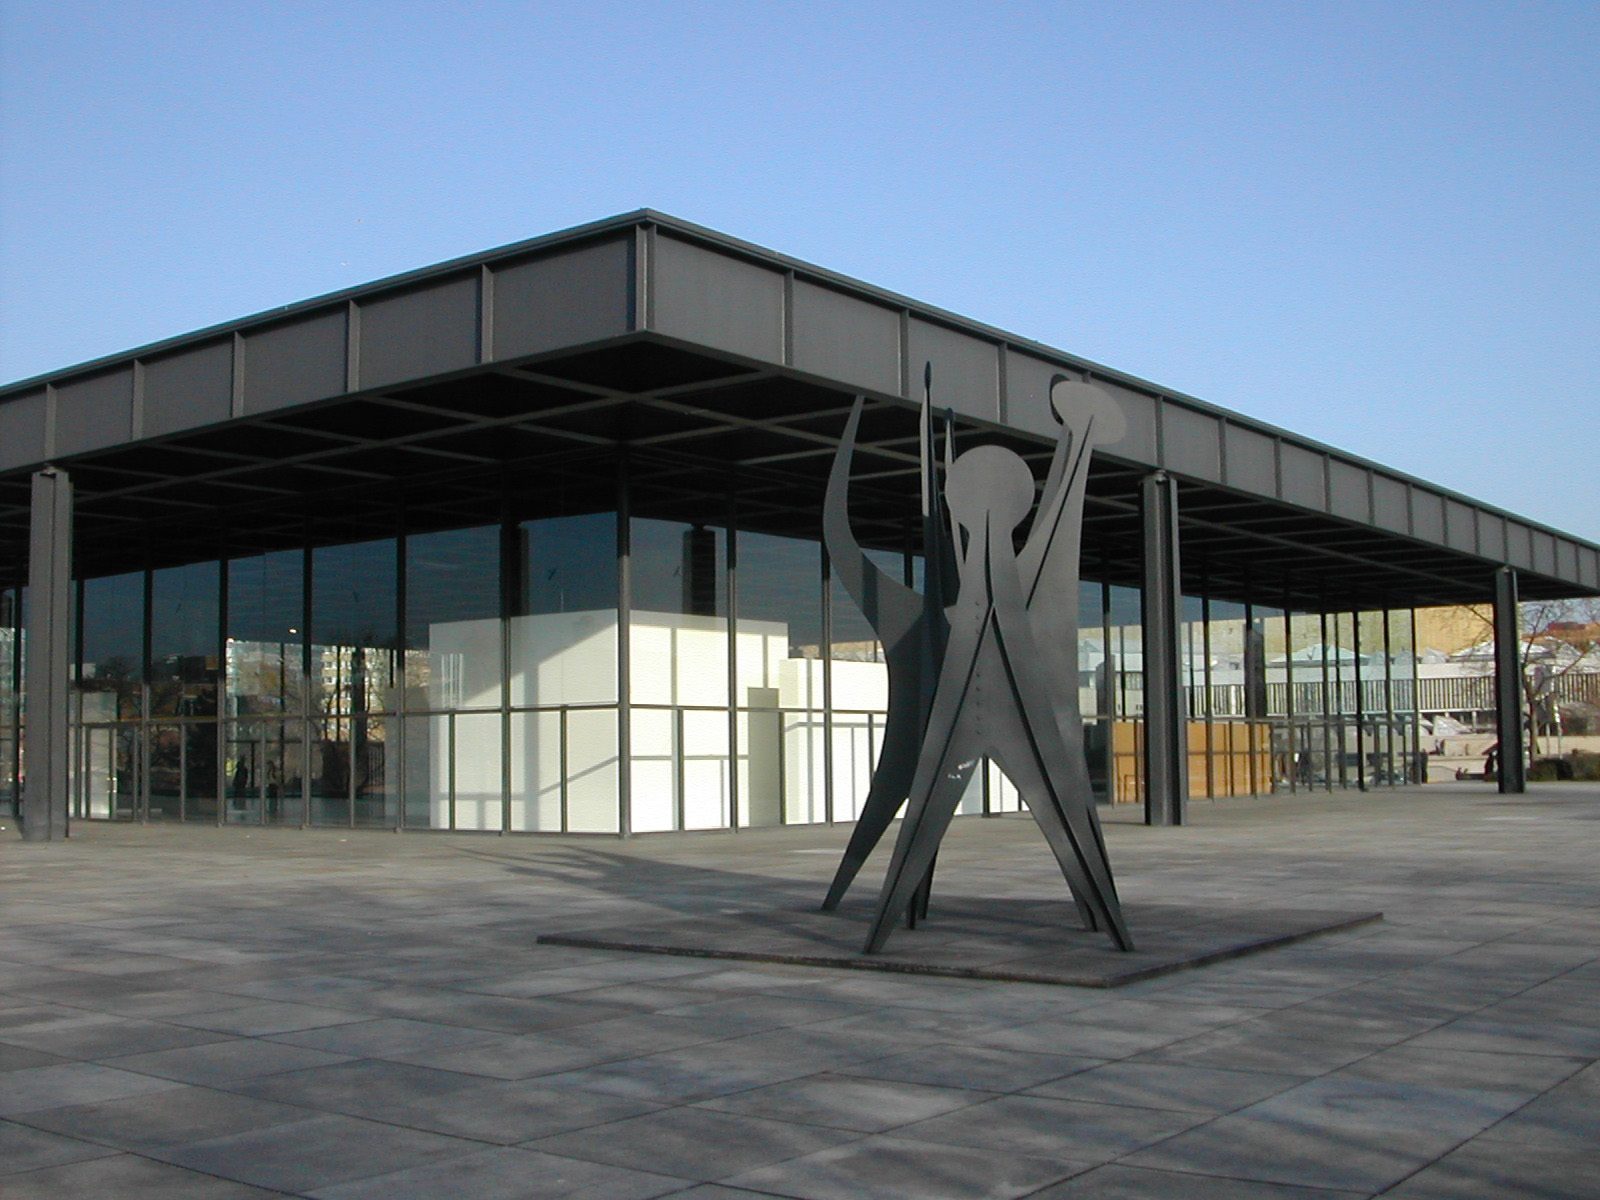 Neue Nationalgalerie di Mies van der Rohe a Berlino. Immagine: Harald Kliems tramite Wikimedia CC BY-SA 2.0